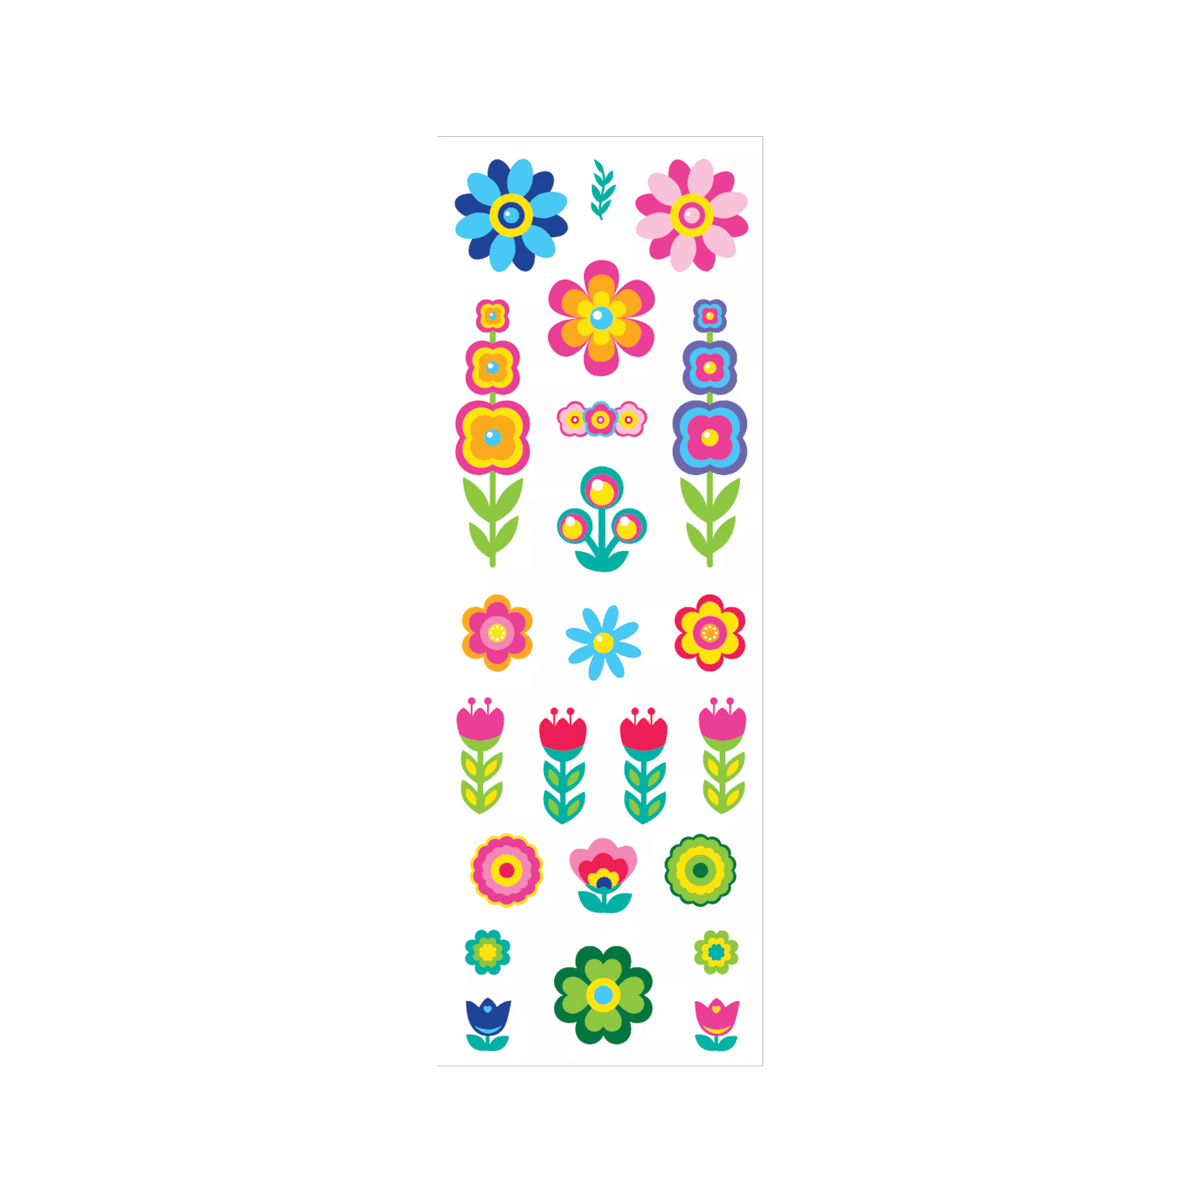 Sticko Stickers - Small Teeny Tiny Flowers